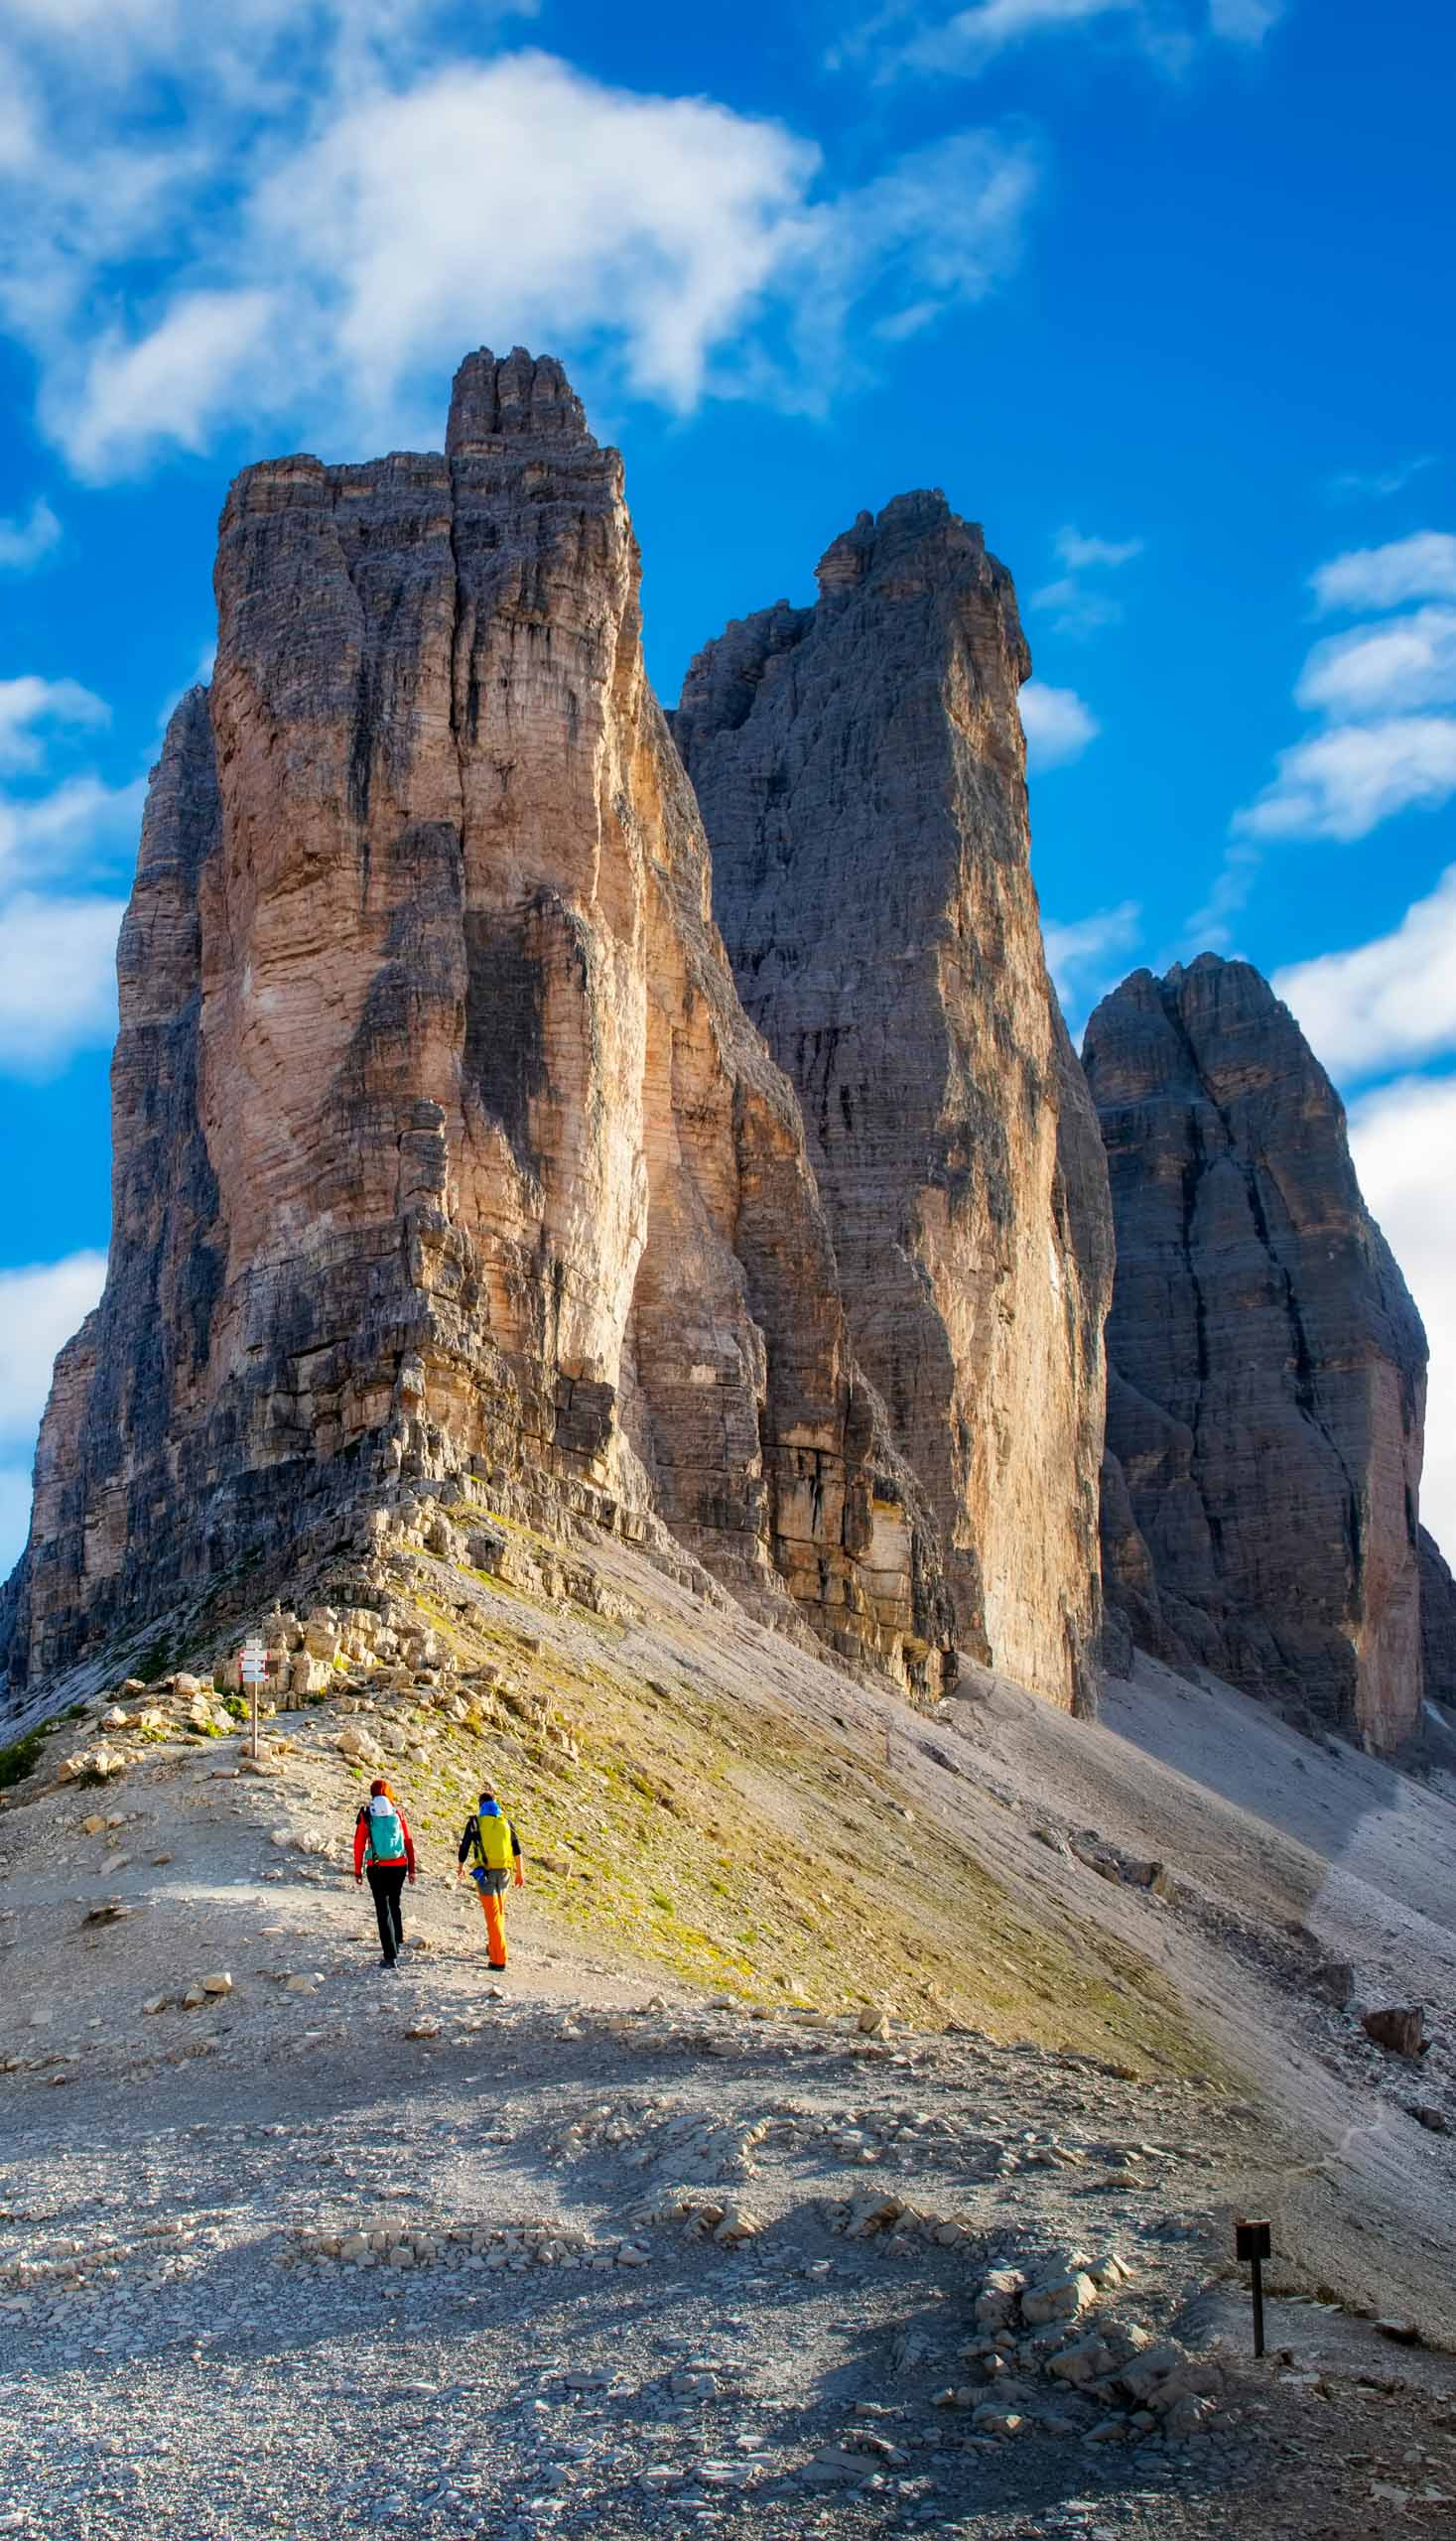 Hikers on the mountain path near the Tre Cime di Lavaredo.